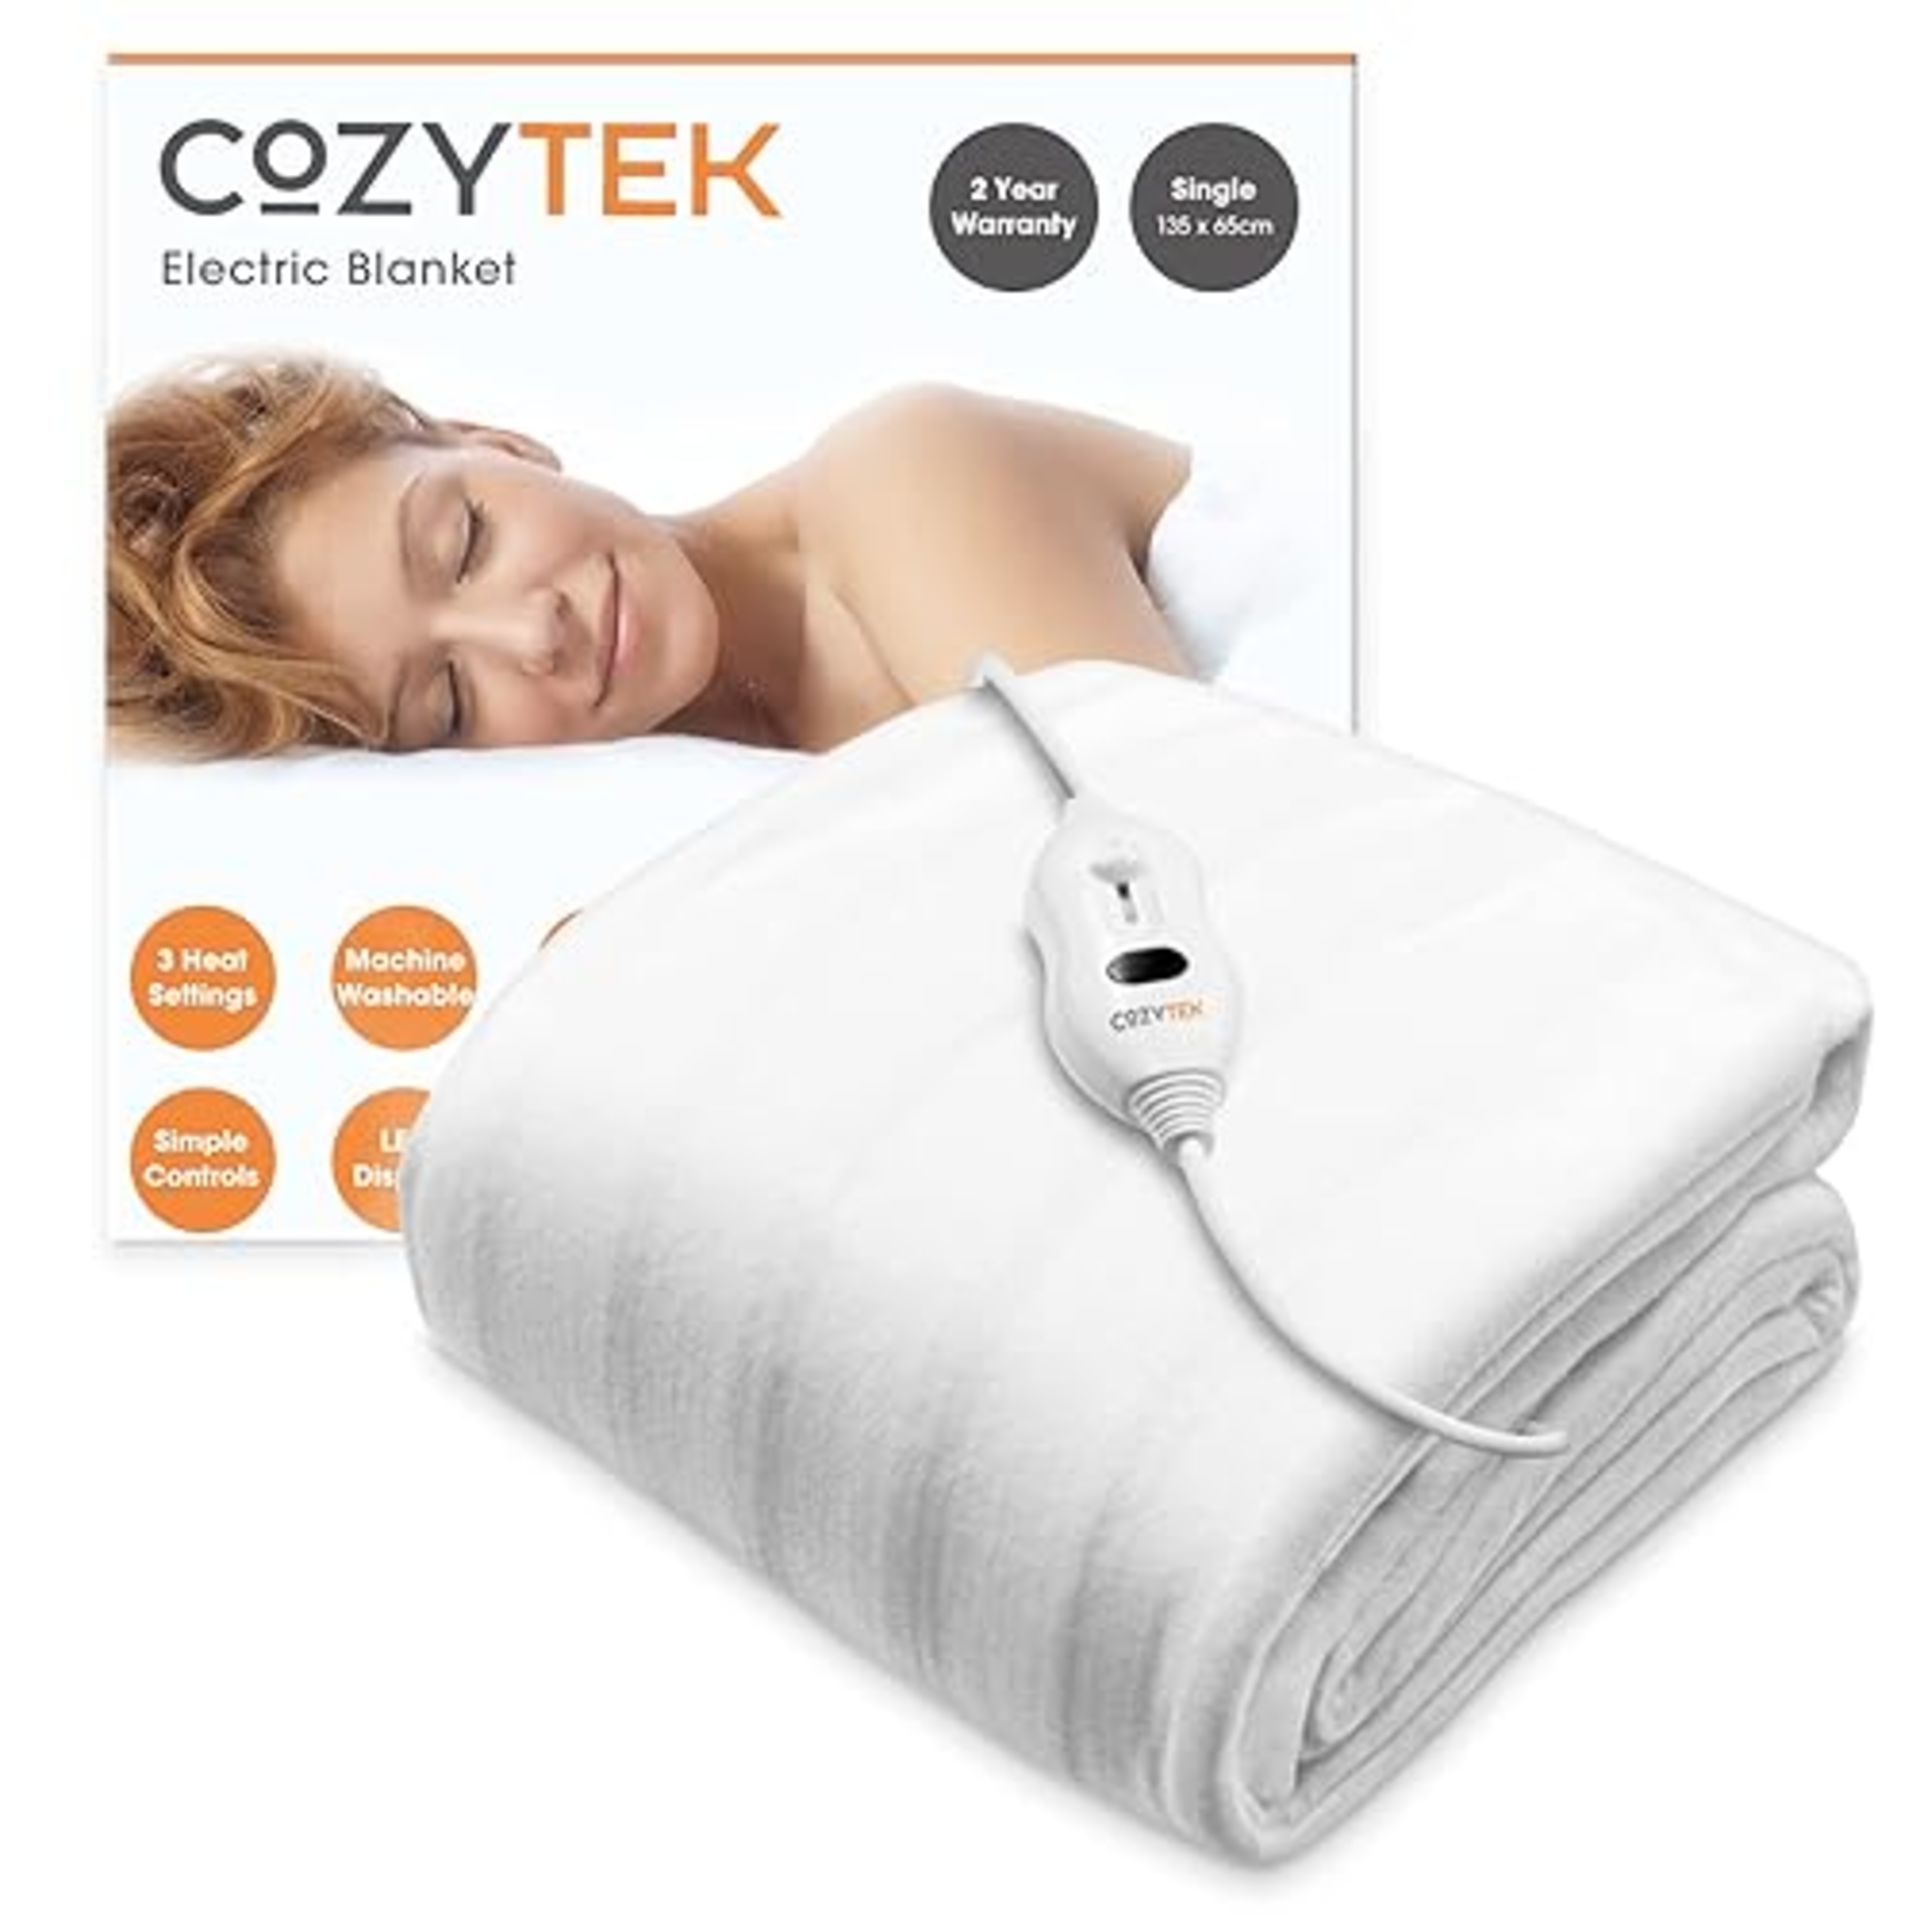 Cozytek Single Polyester Electric Blanket Size Detachable Control Underblanket 3 Heat Settings Wh...